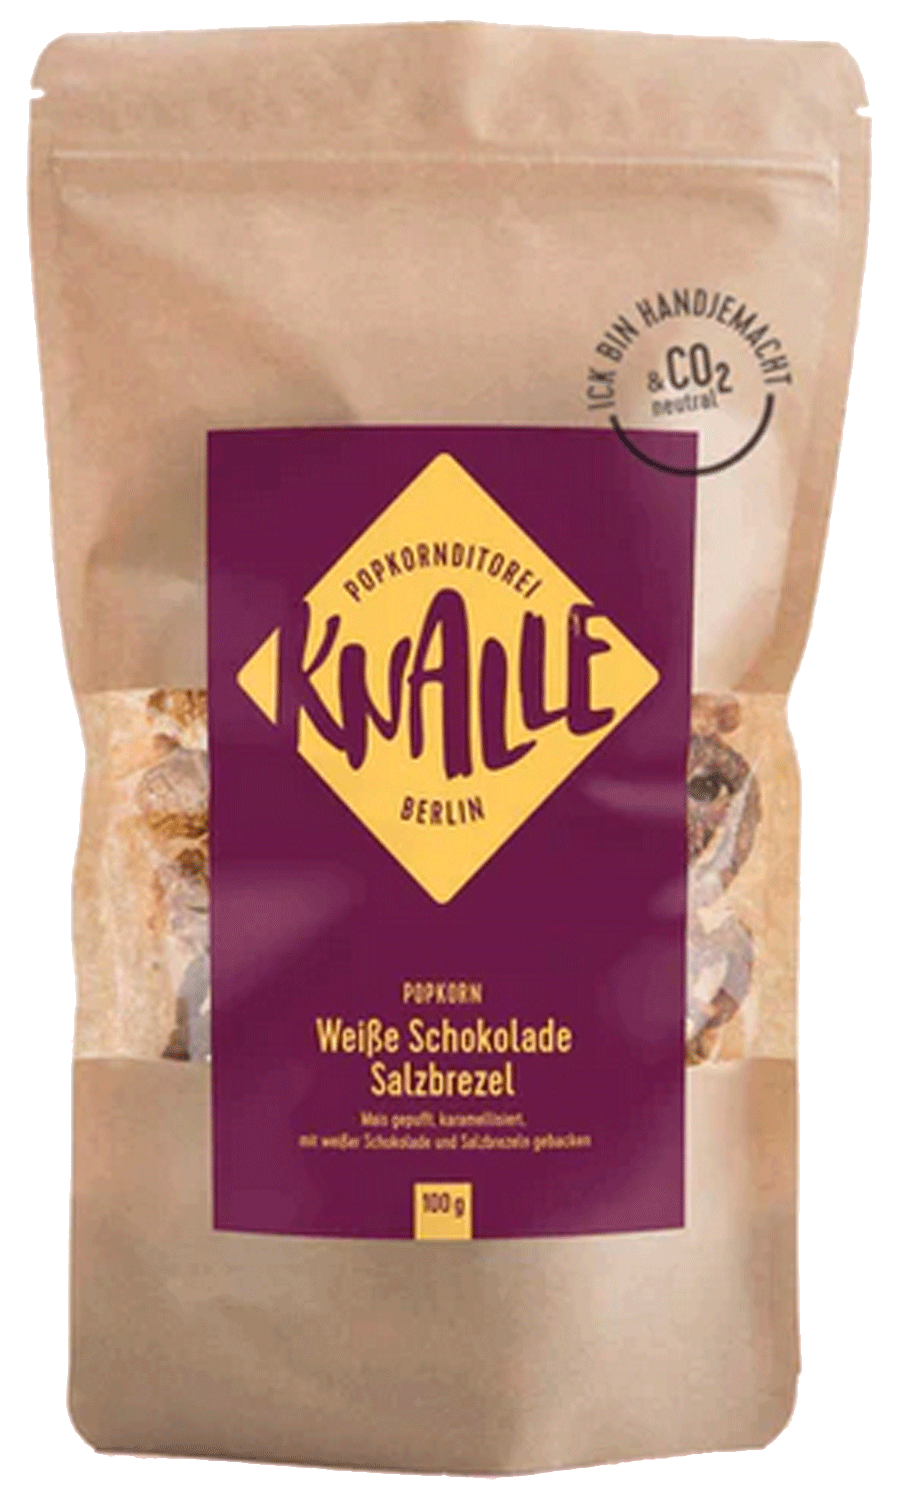 9x15-Knalle-weisse-Schokolade-Salzbrezel